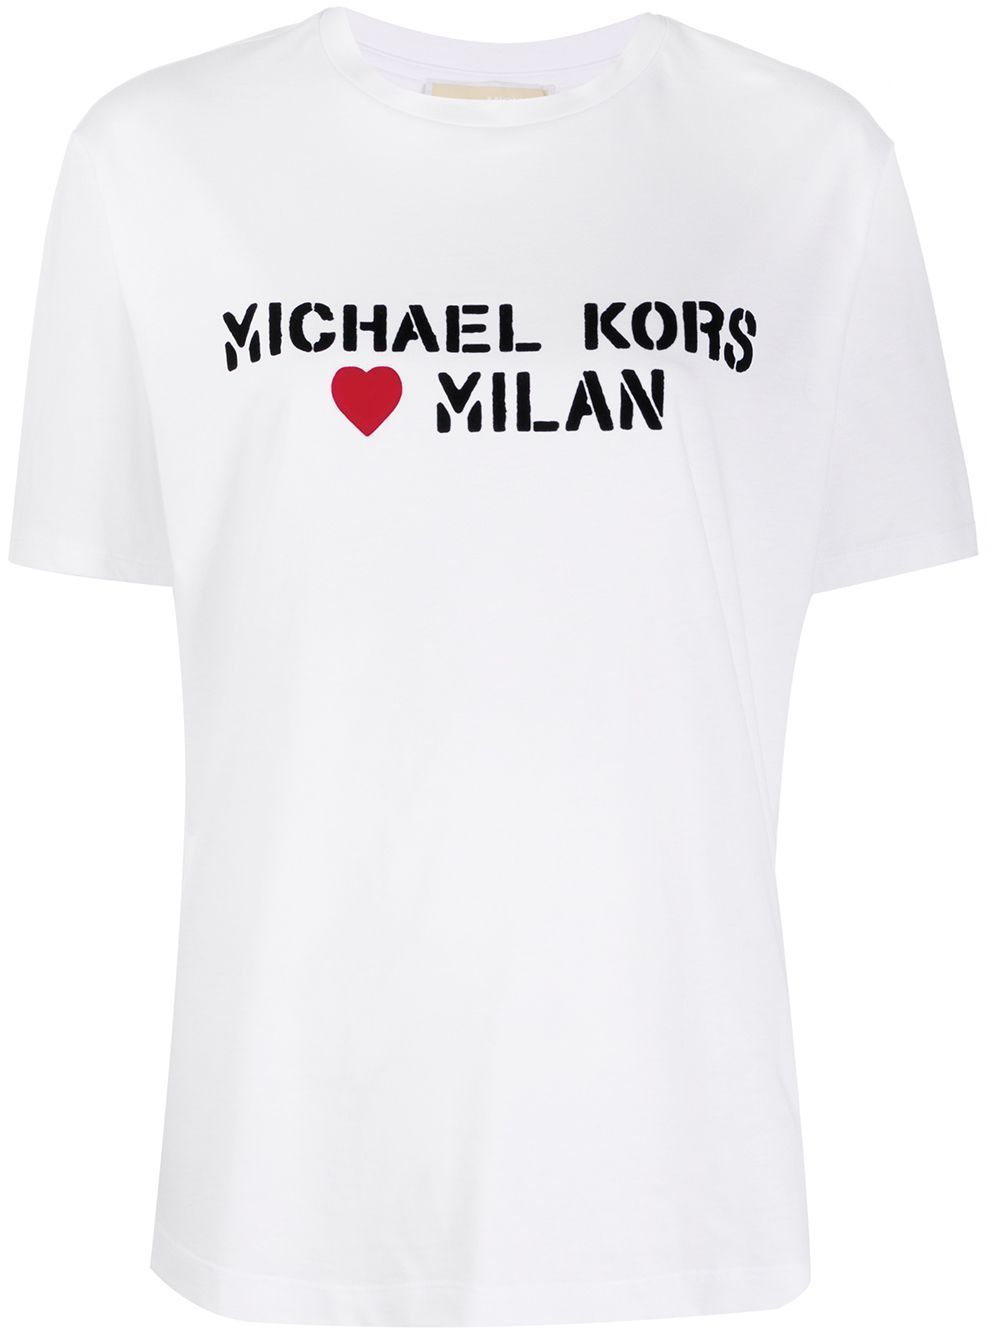 MICHAEL KORS OVERSIZED LOVE MILAN T-SHIRT